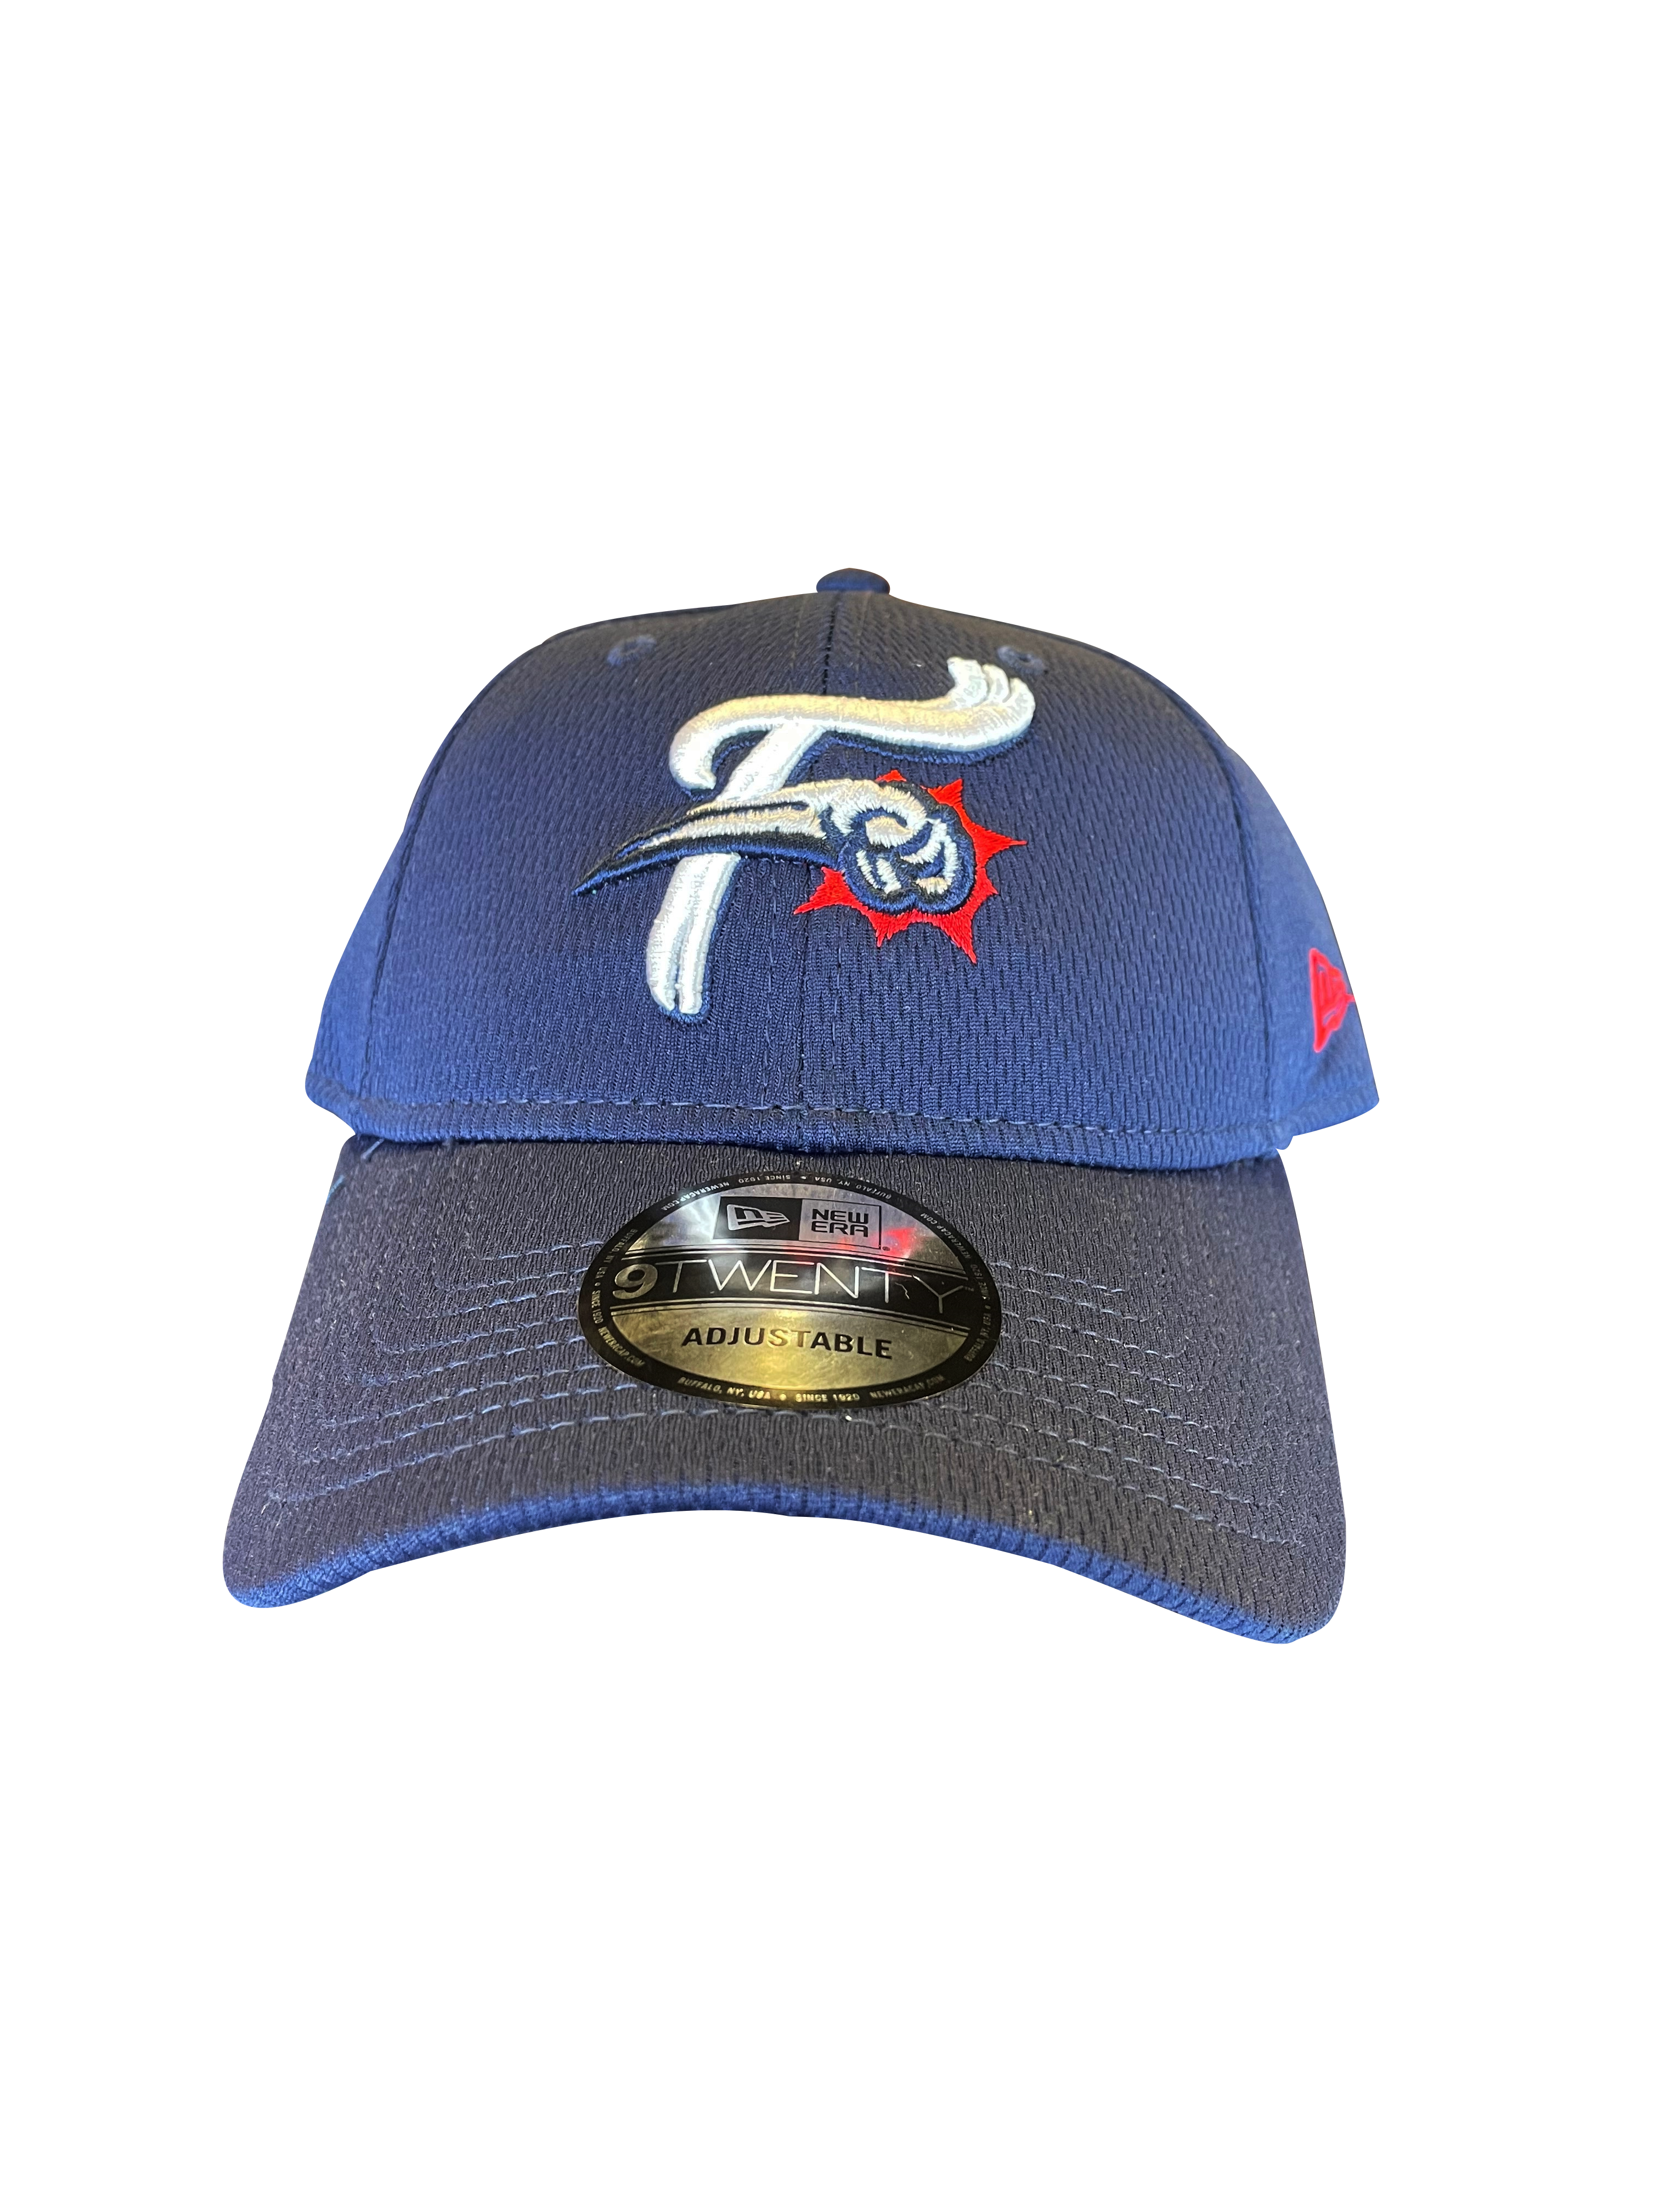 New Era 2023 MLB All-Star Game 9TWENTY Adjustable Hat - Navy